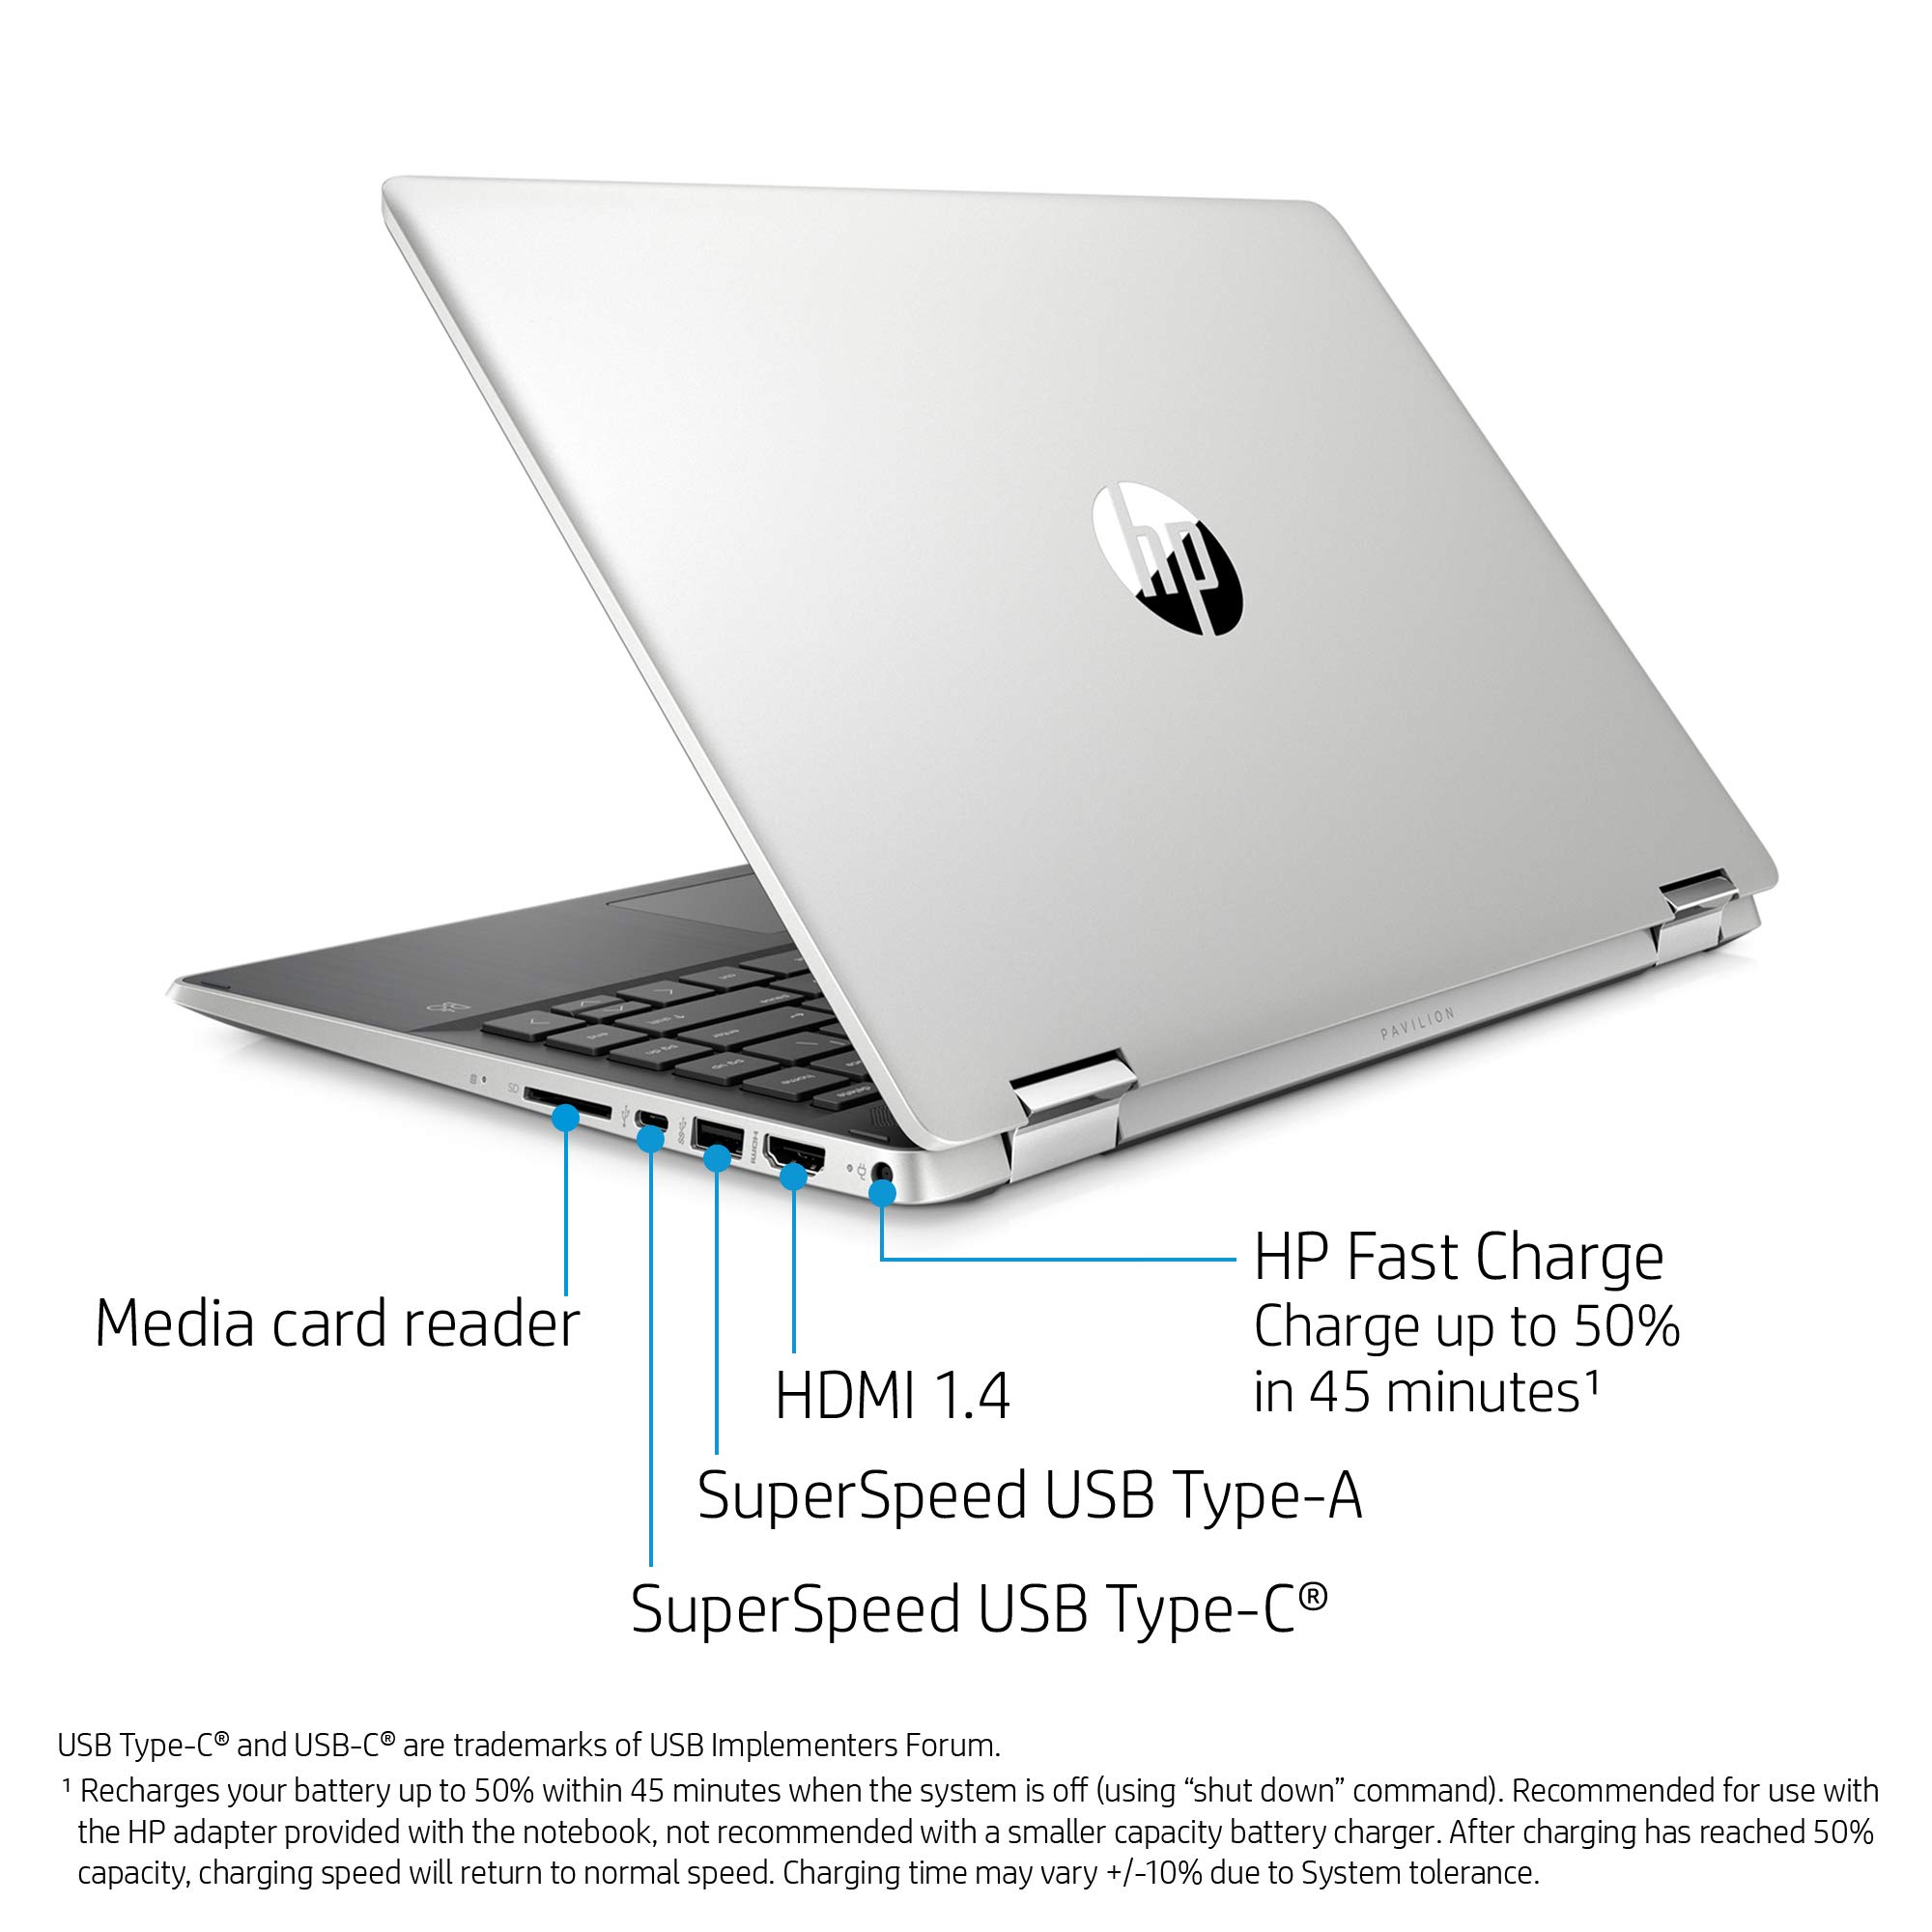 HP Pavilion x360 14 Convertible 2-in-1 Laptop, 14” Full HD Touchscreen Display, Intel Core i5, 8 GB DDR4 RAM, 512 GB SSD Storage, Windows 10 Home, Backlit Keyboard (14-dh2011nr, 2020 Model)